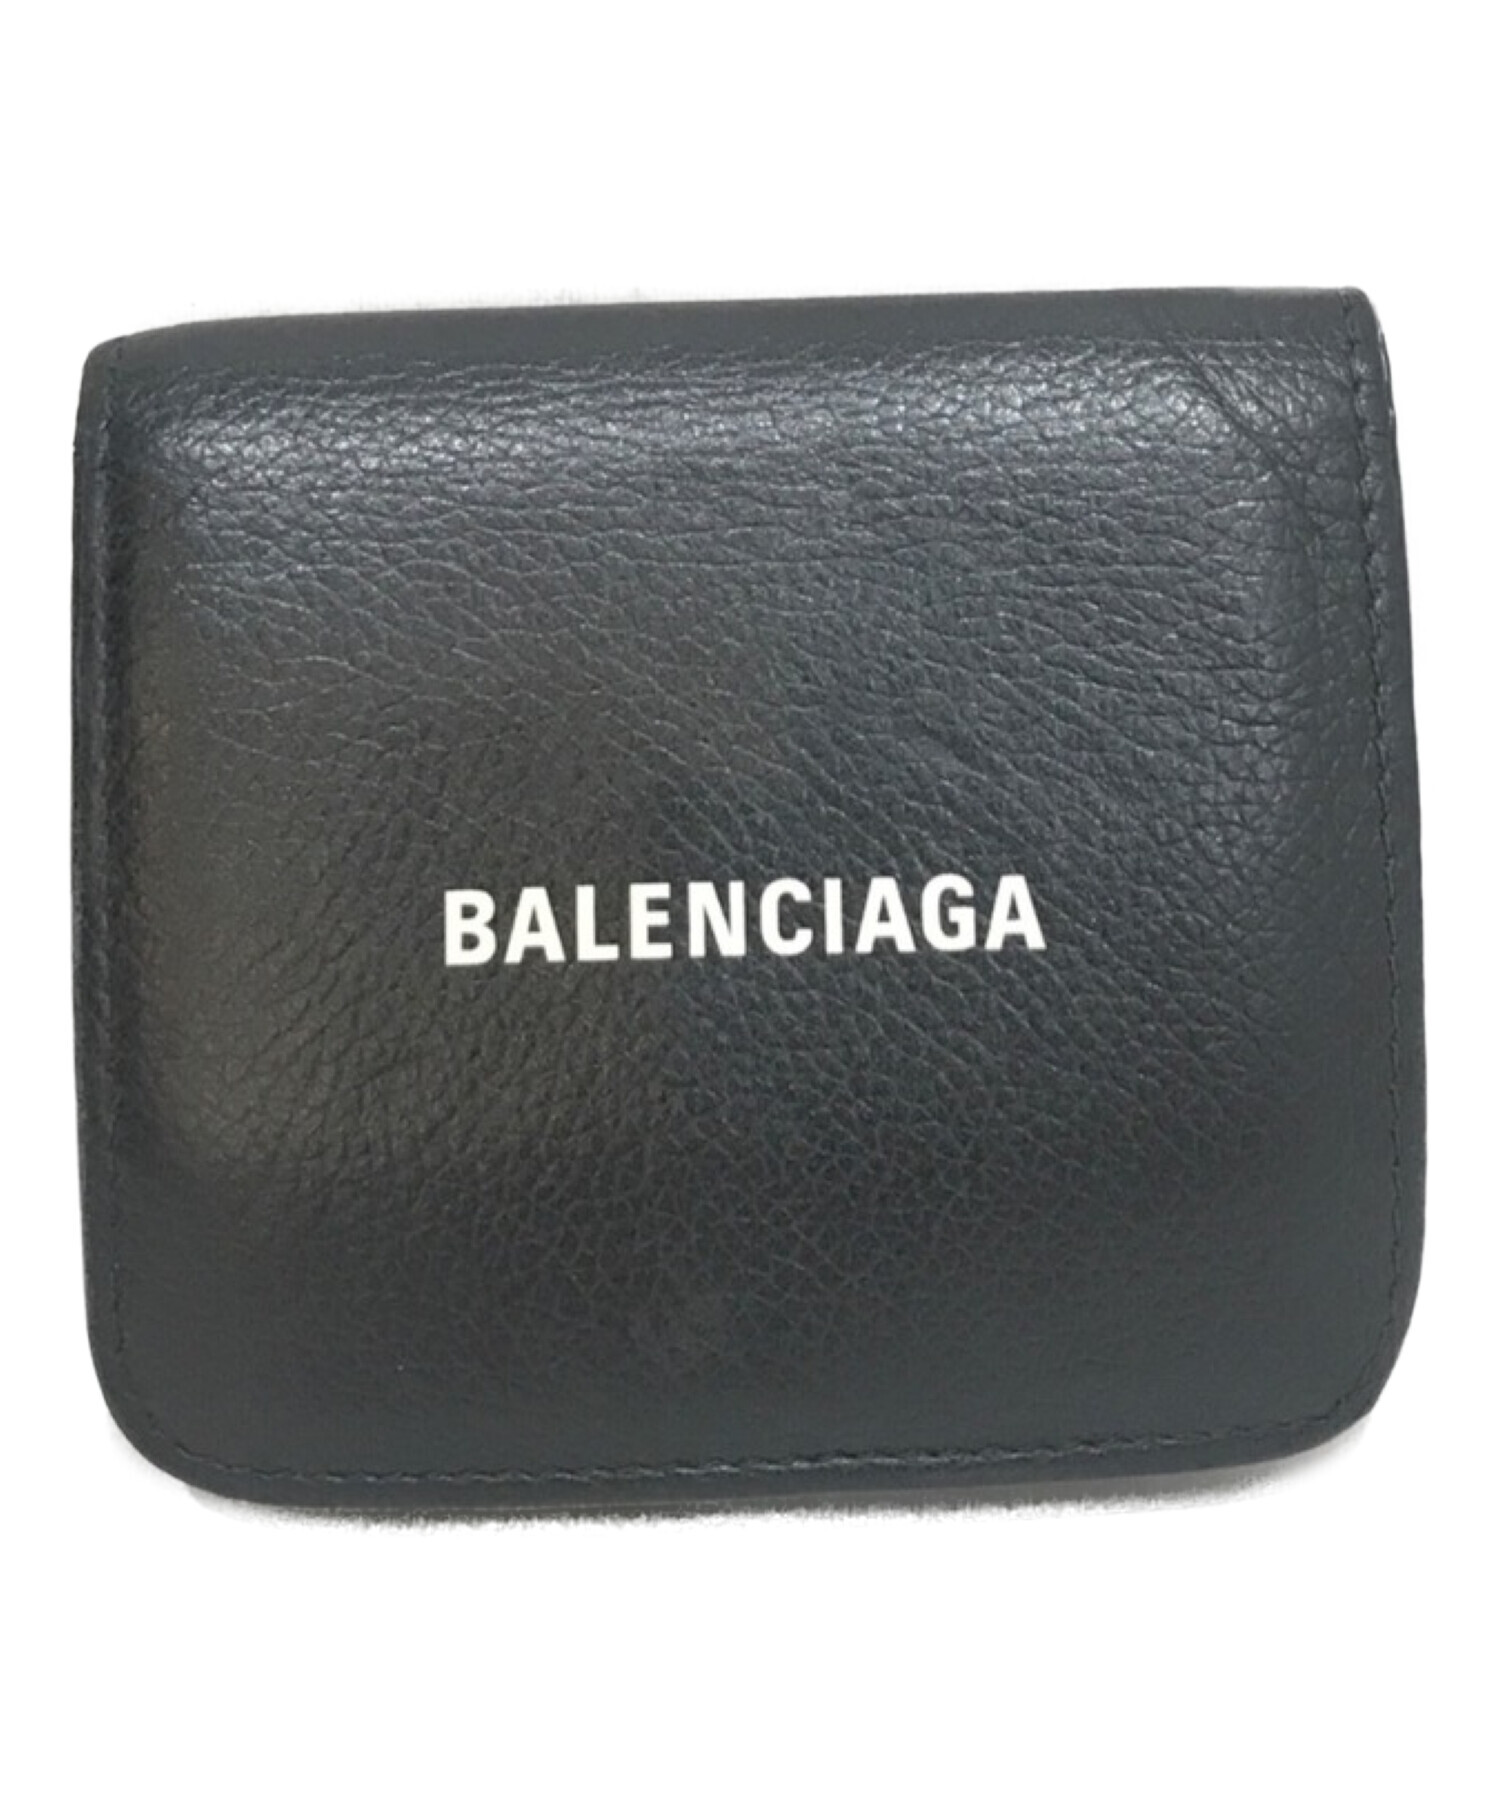 BALENCIAGA バレンシアガ 二つ折財布